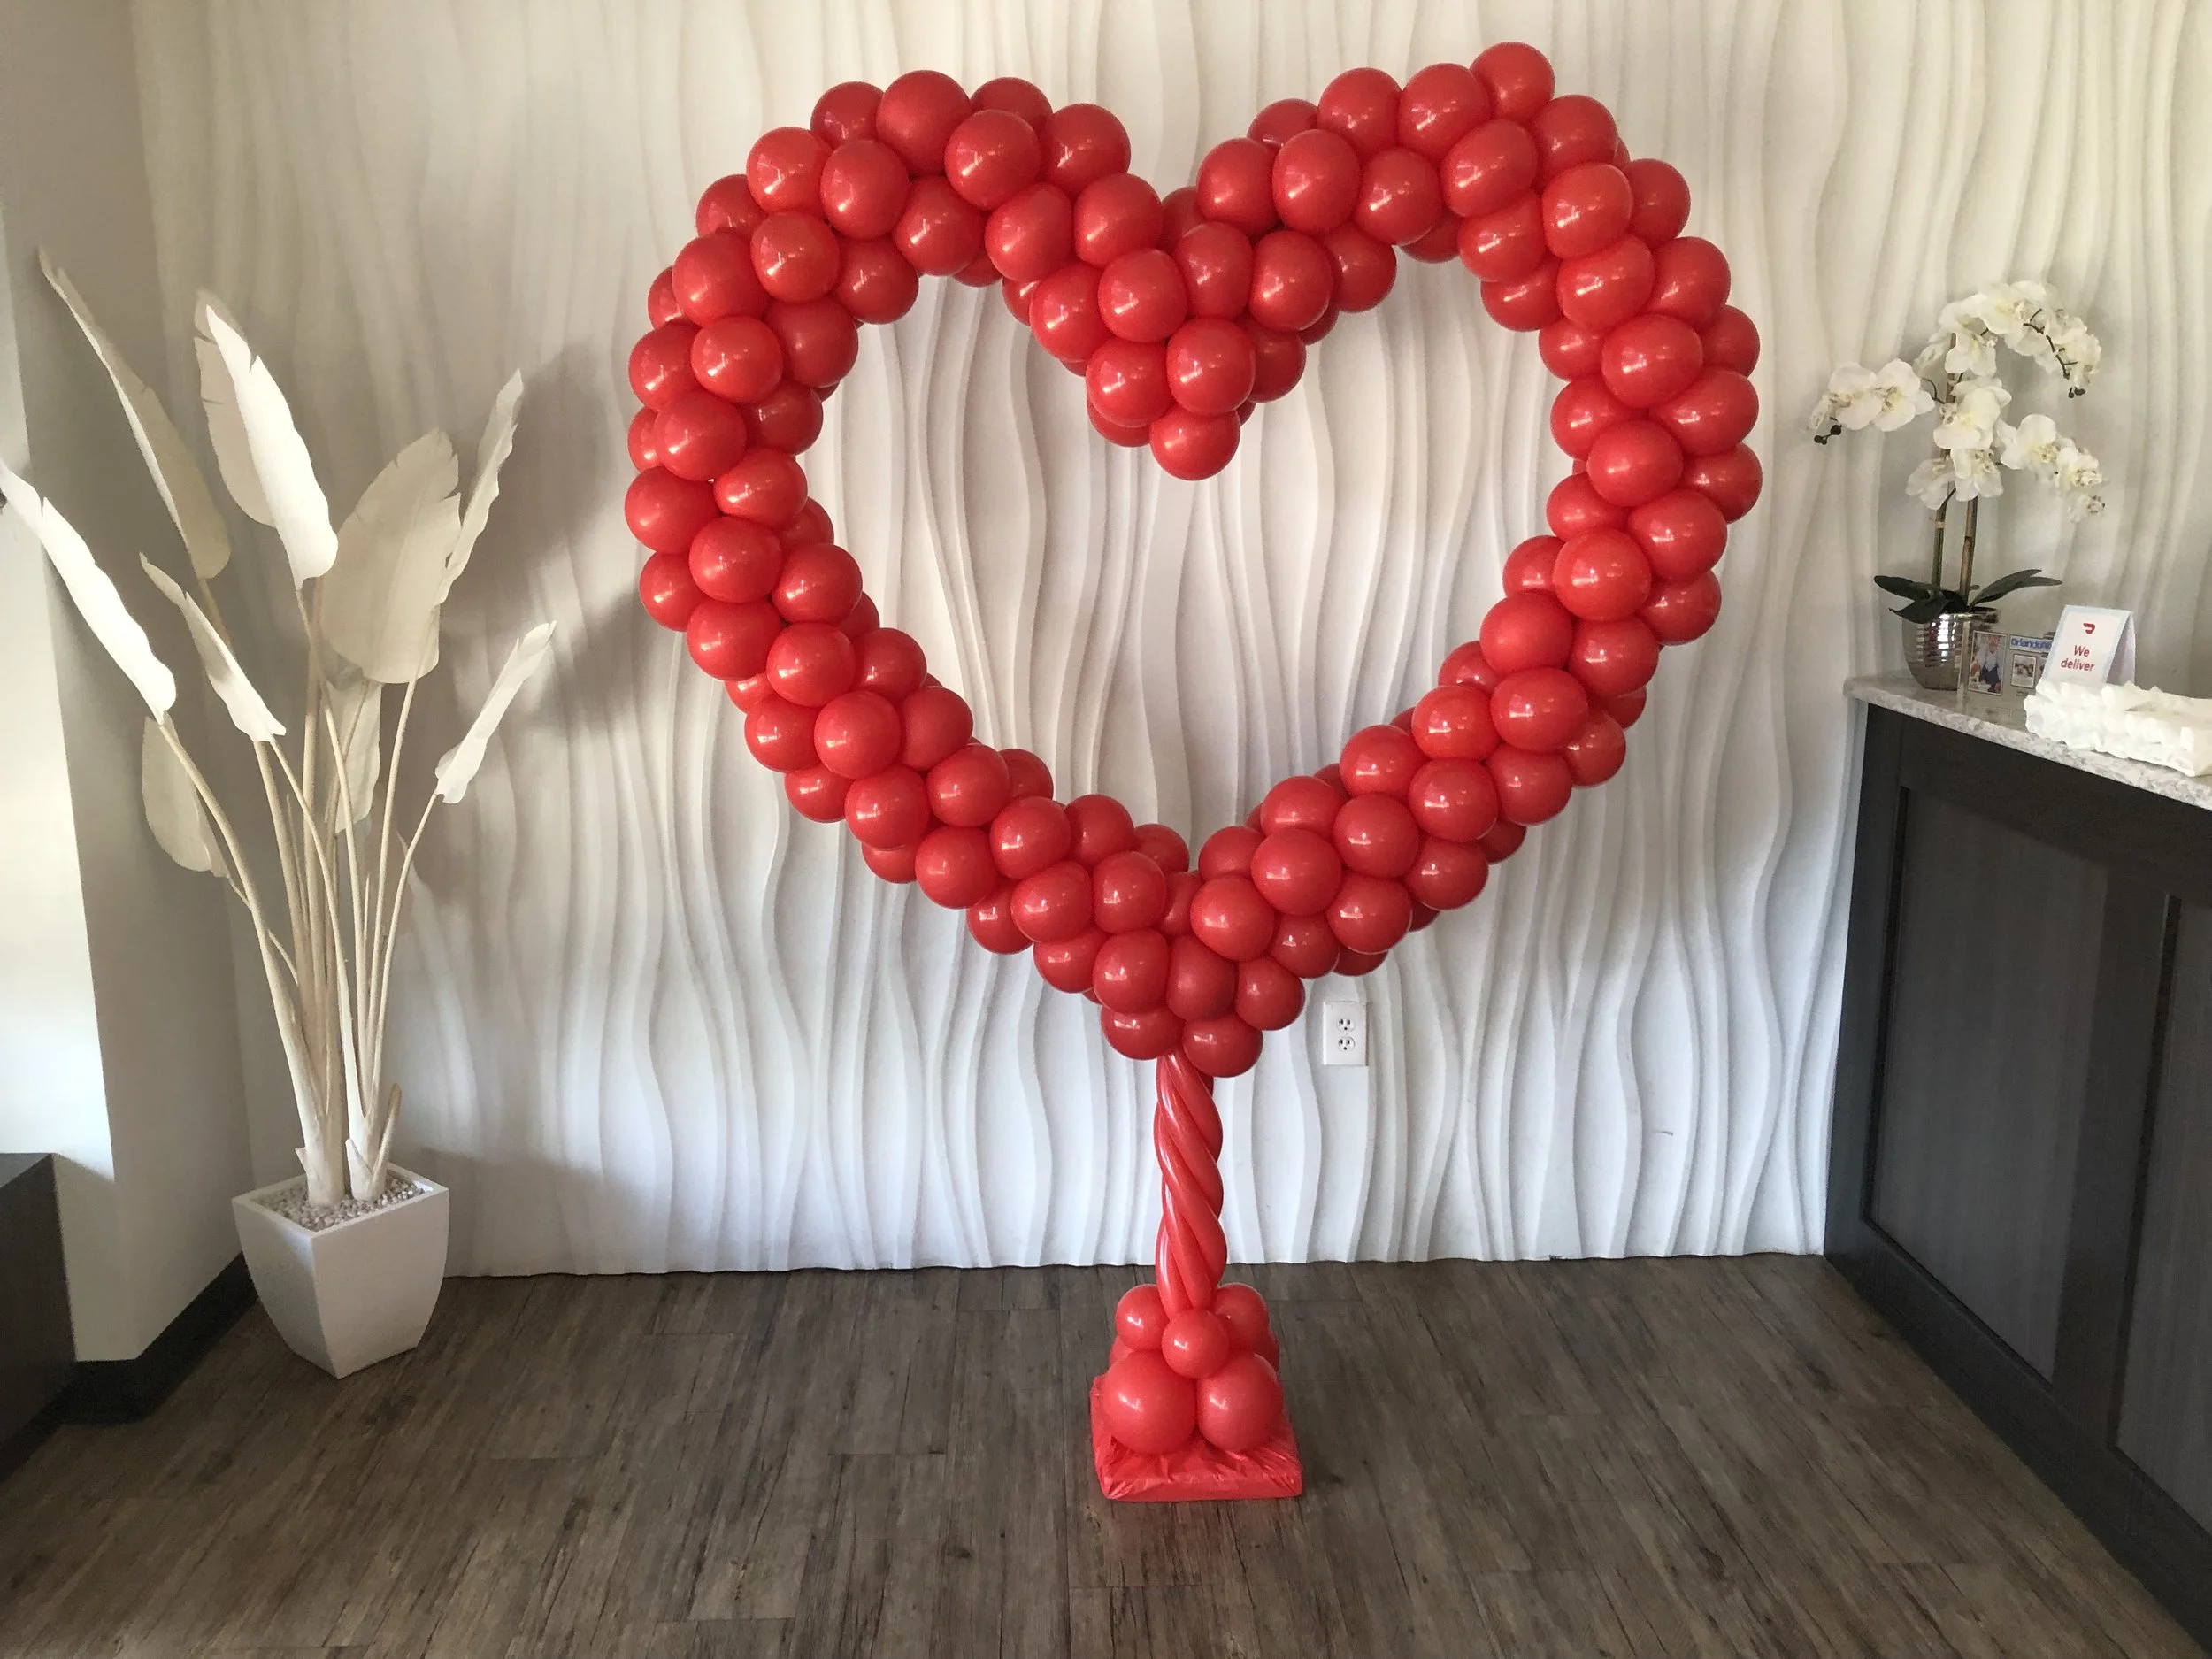 Balloons for Valentine’s Day celebration